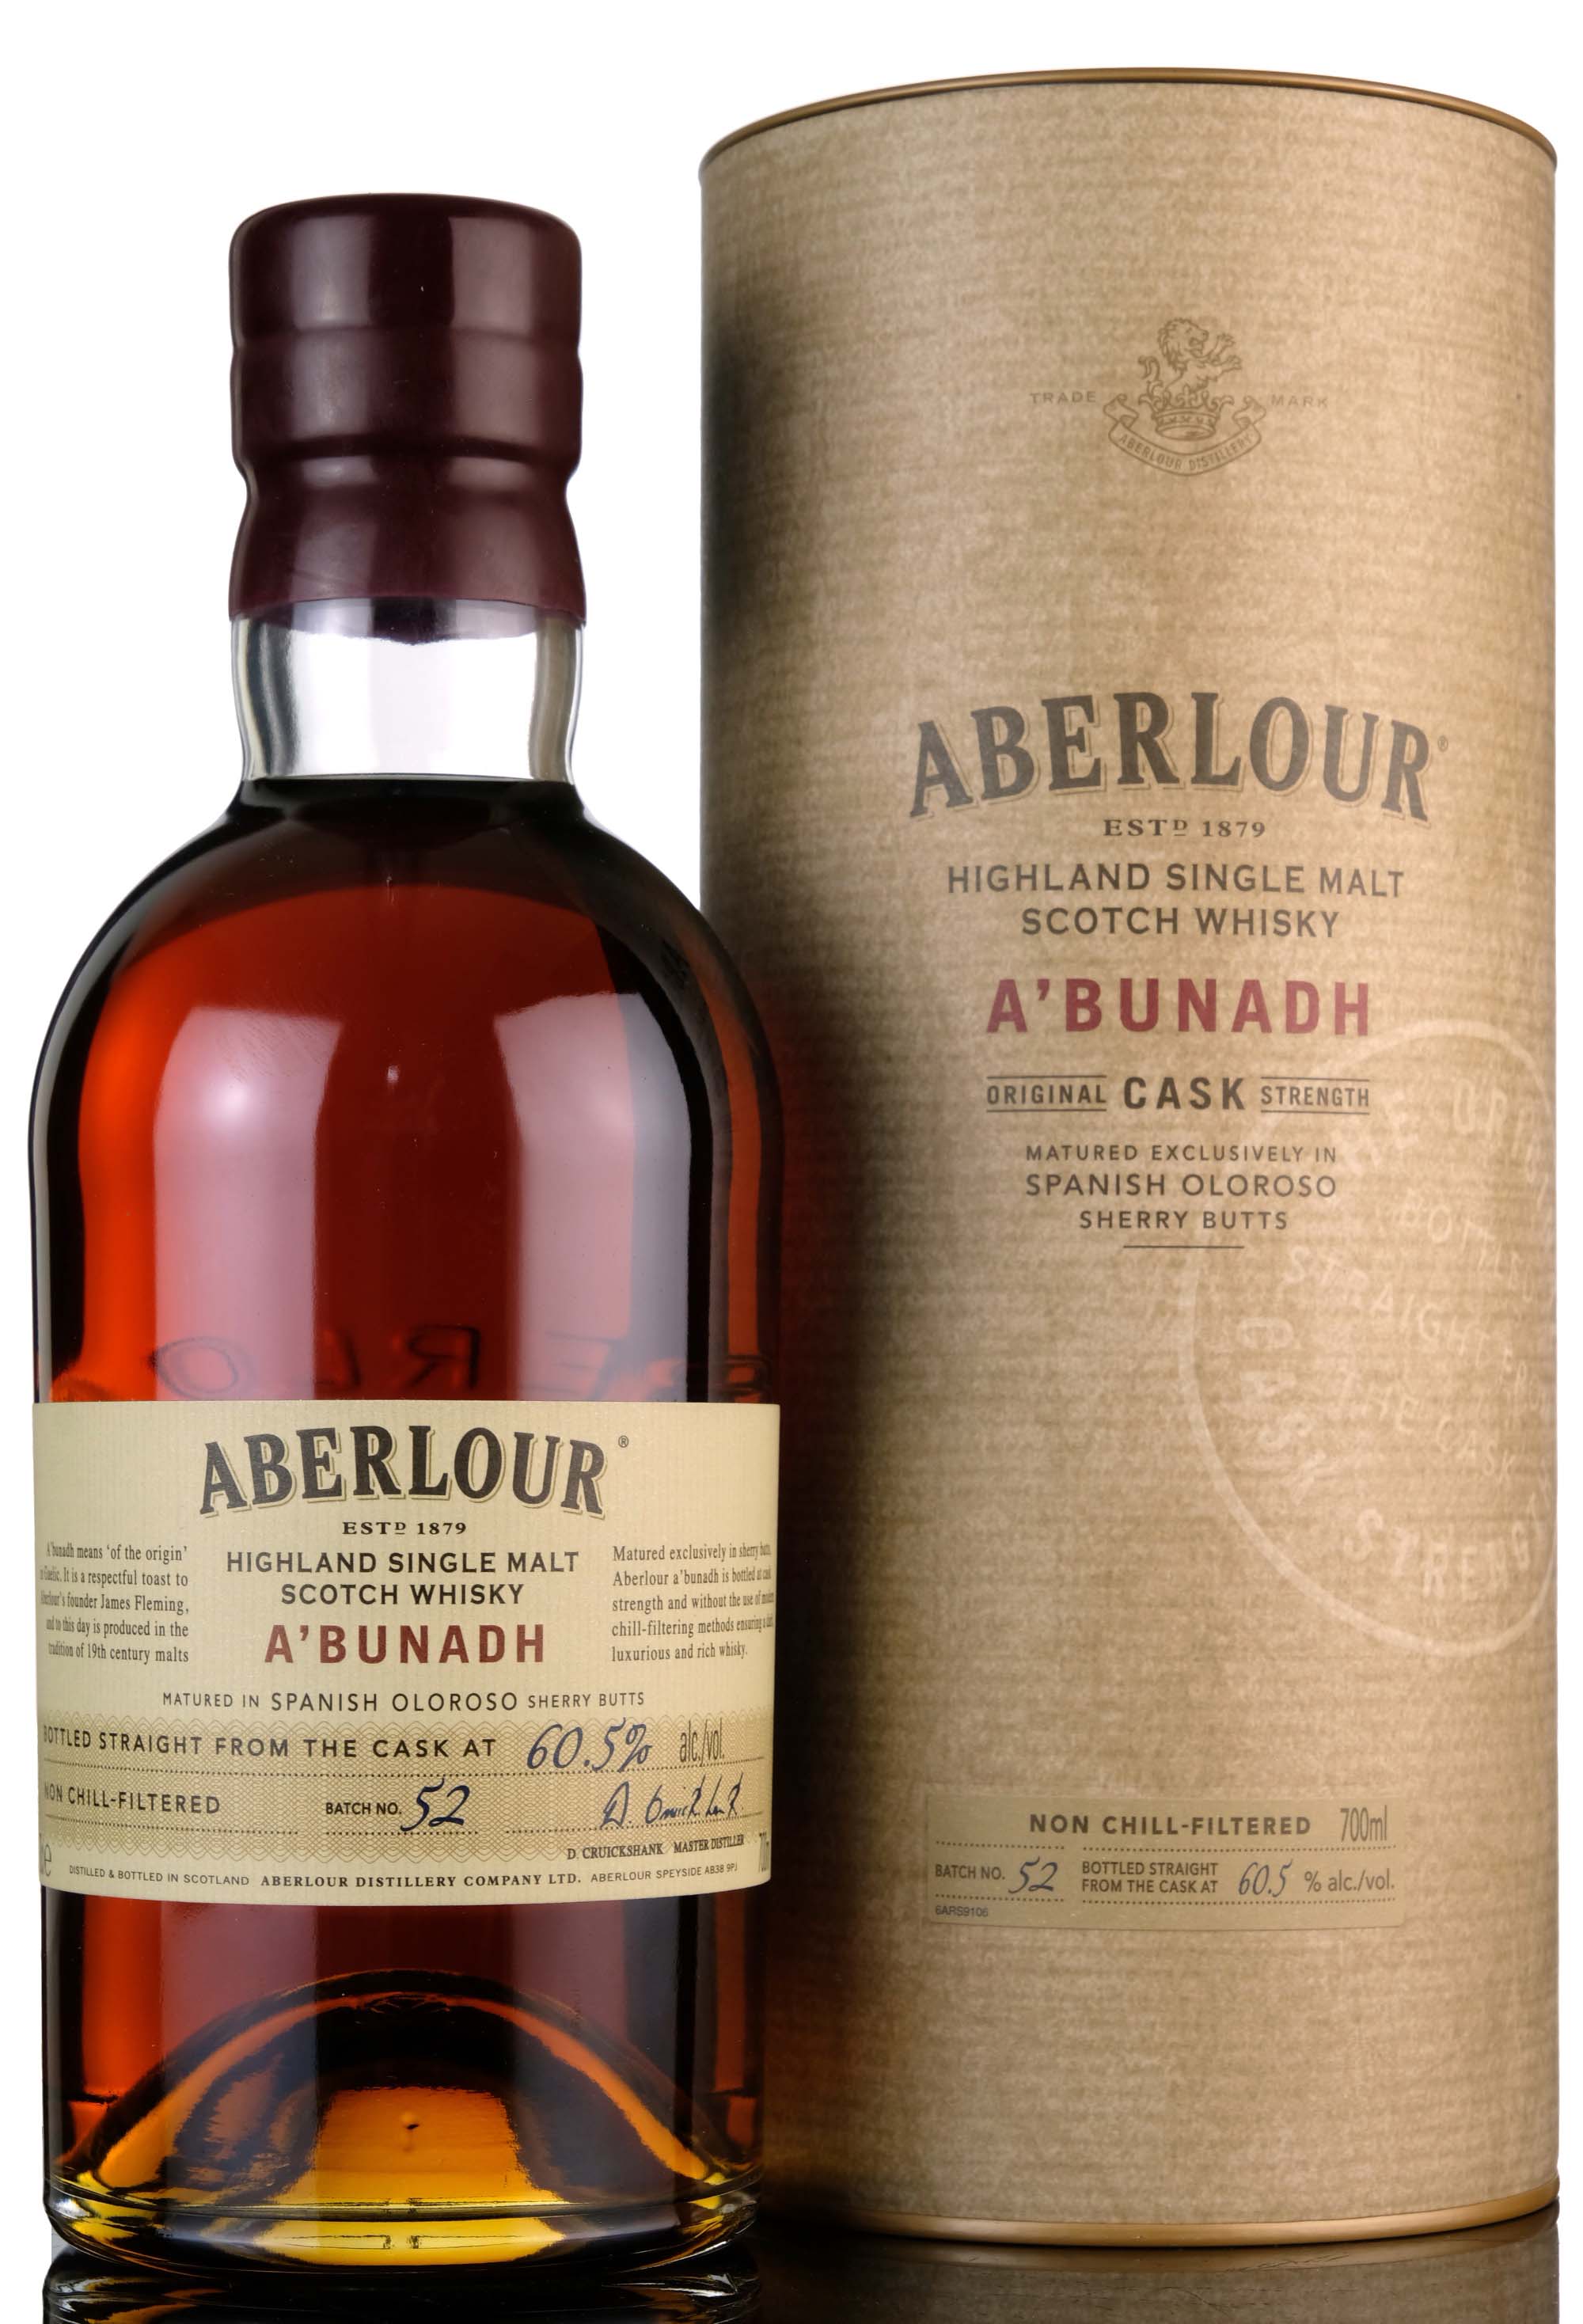 Aberlour A'bunadh - Batch 52 - 2015 Release